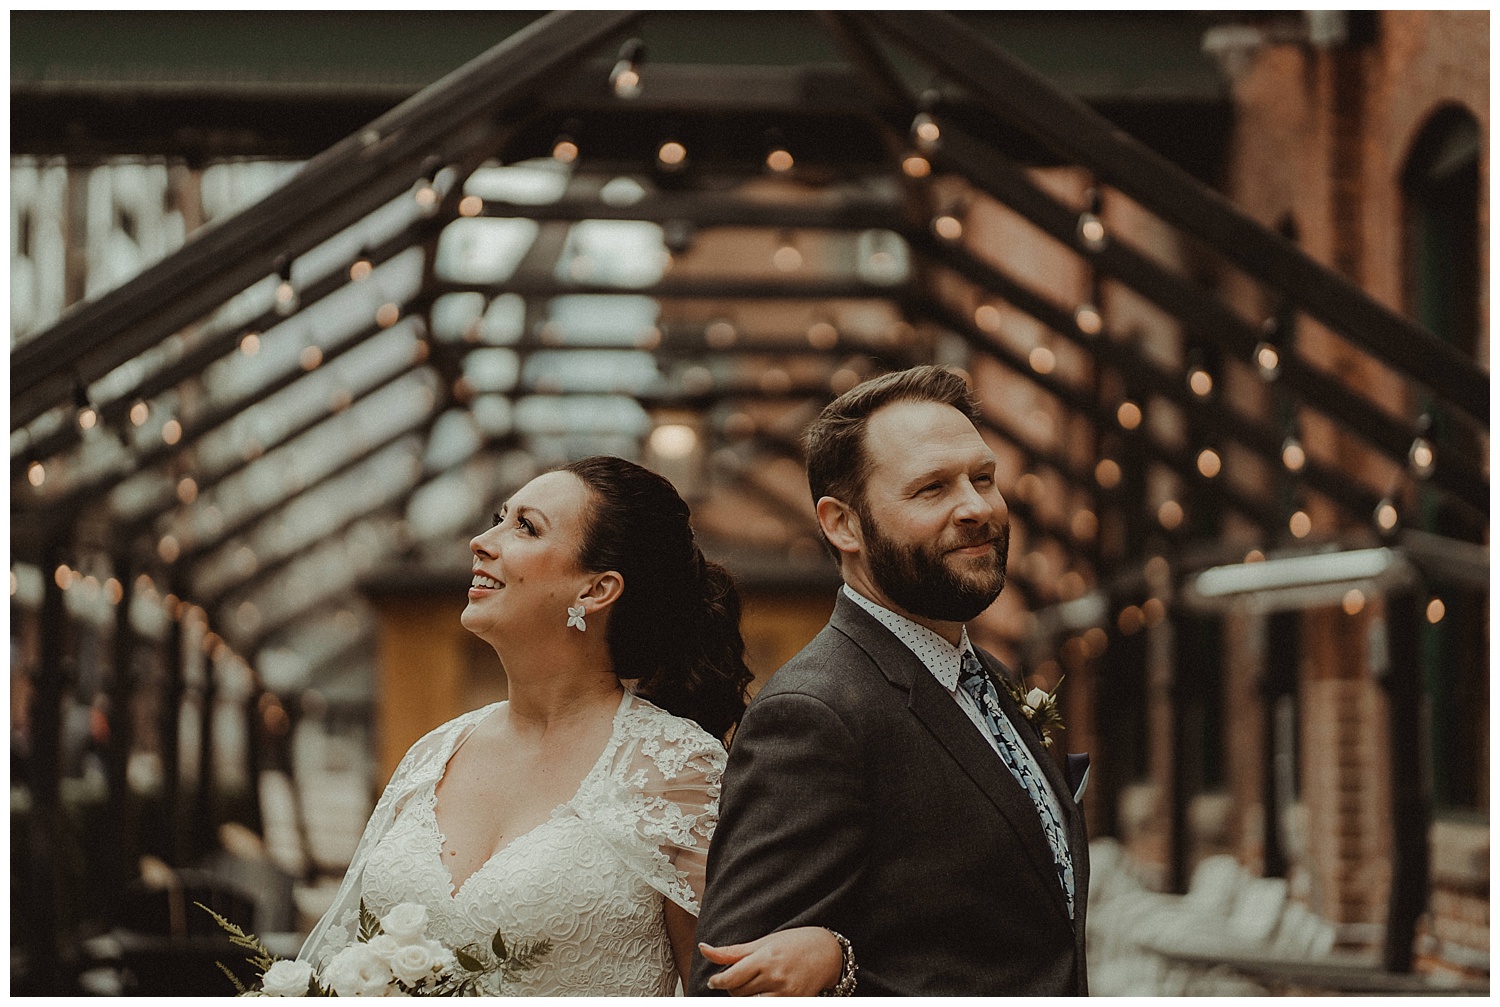 Katie Marie Photography | Archeo Wedding Arta Gallery Wedding | Distillery District Wedding | Toronto Wedding Photographer | Hamilton Toronto Ontario Wedding Photographer |_0027.jpg